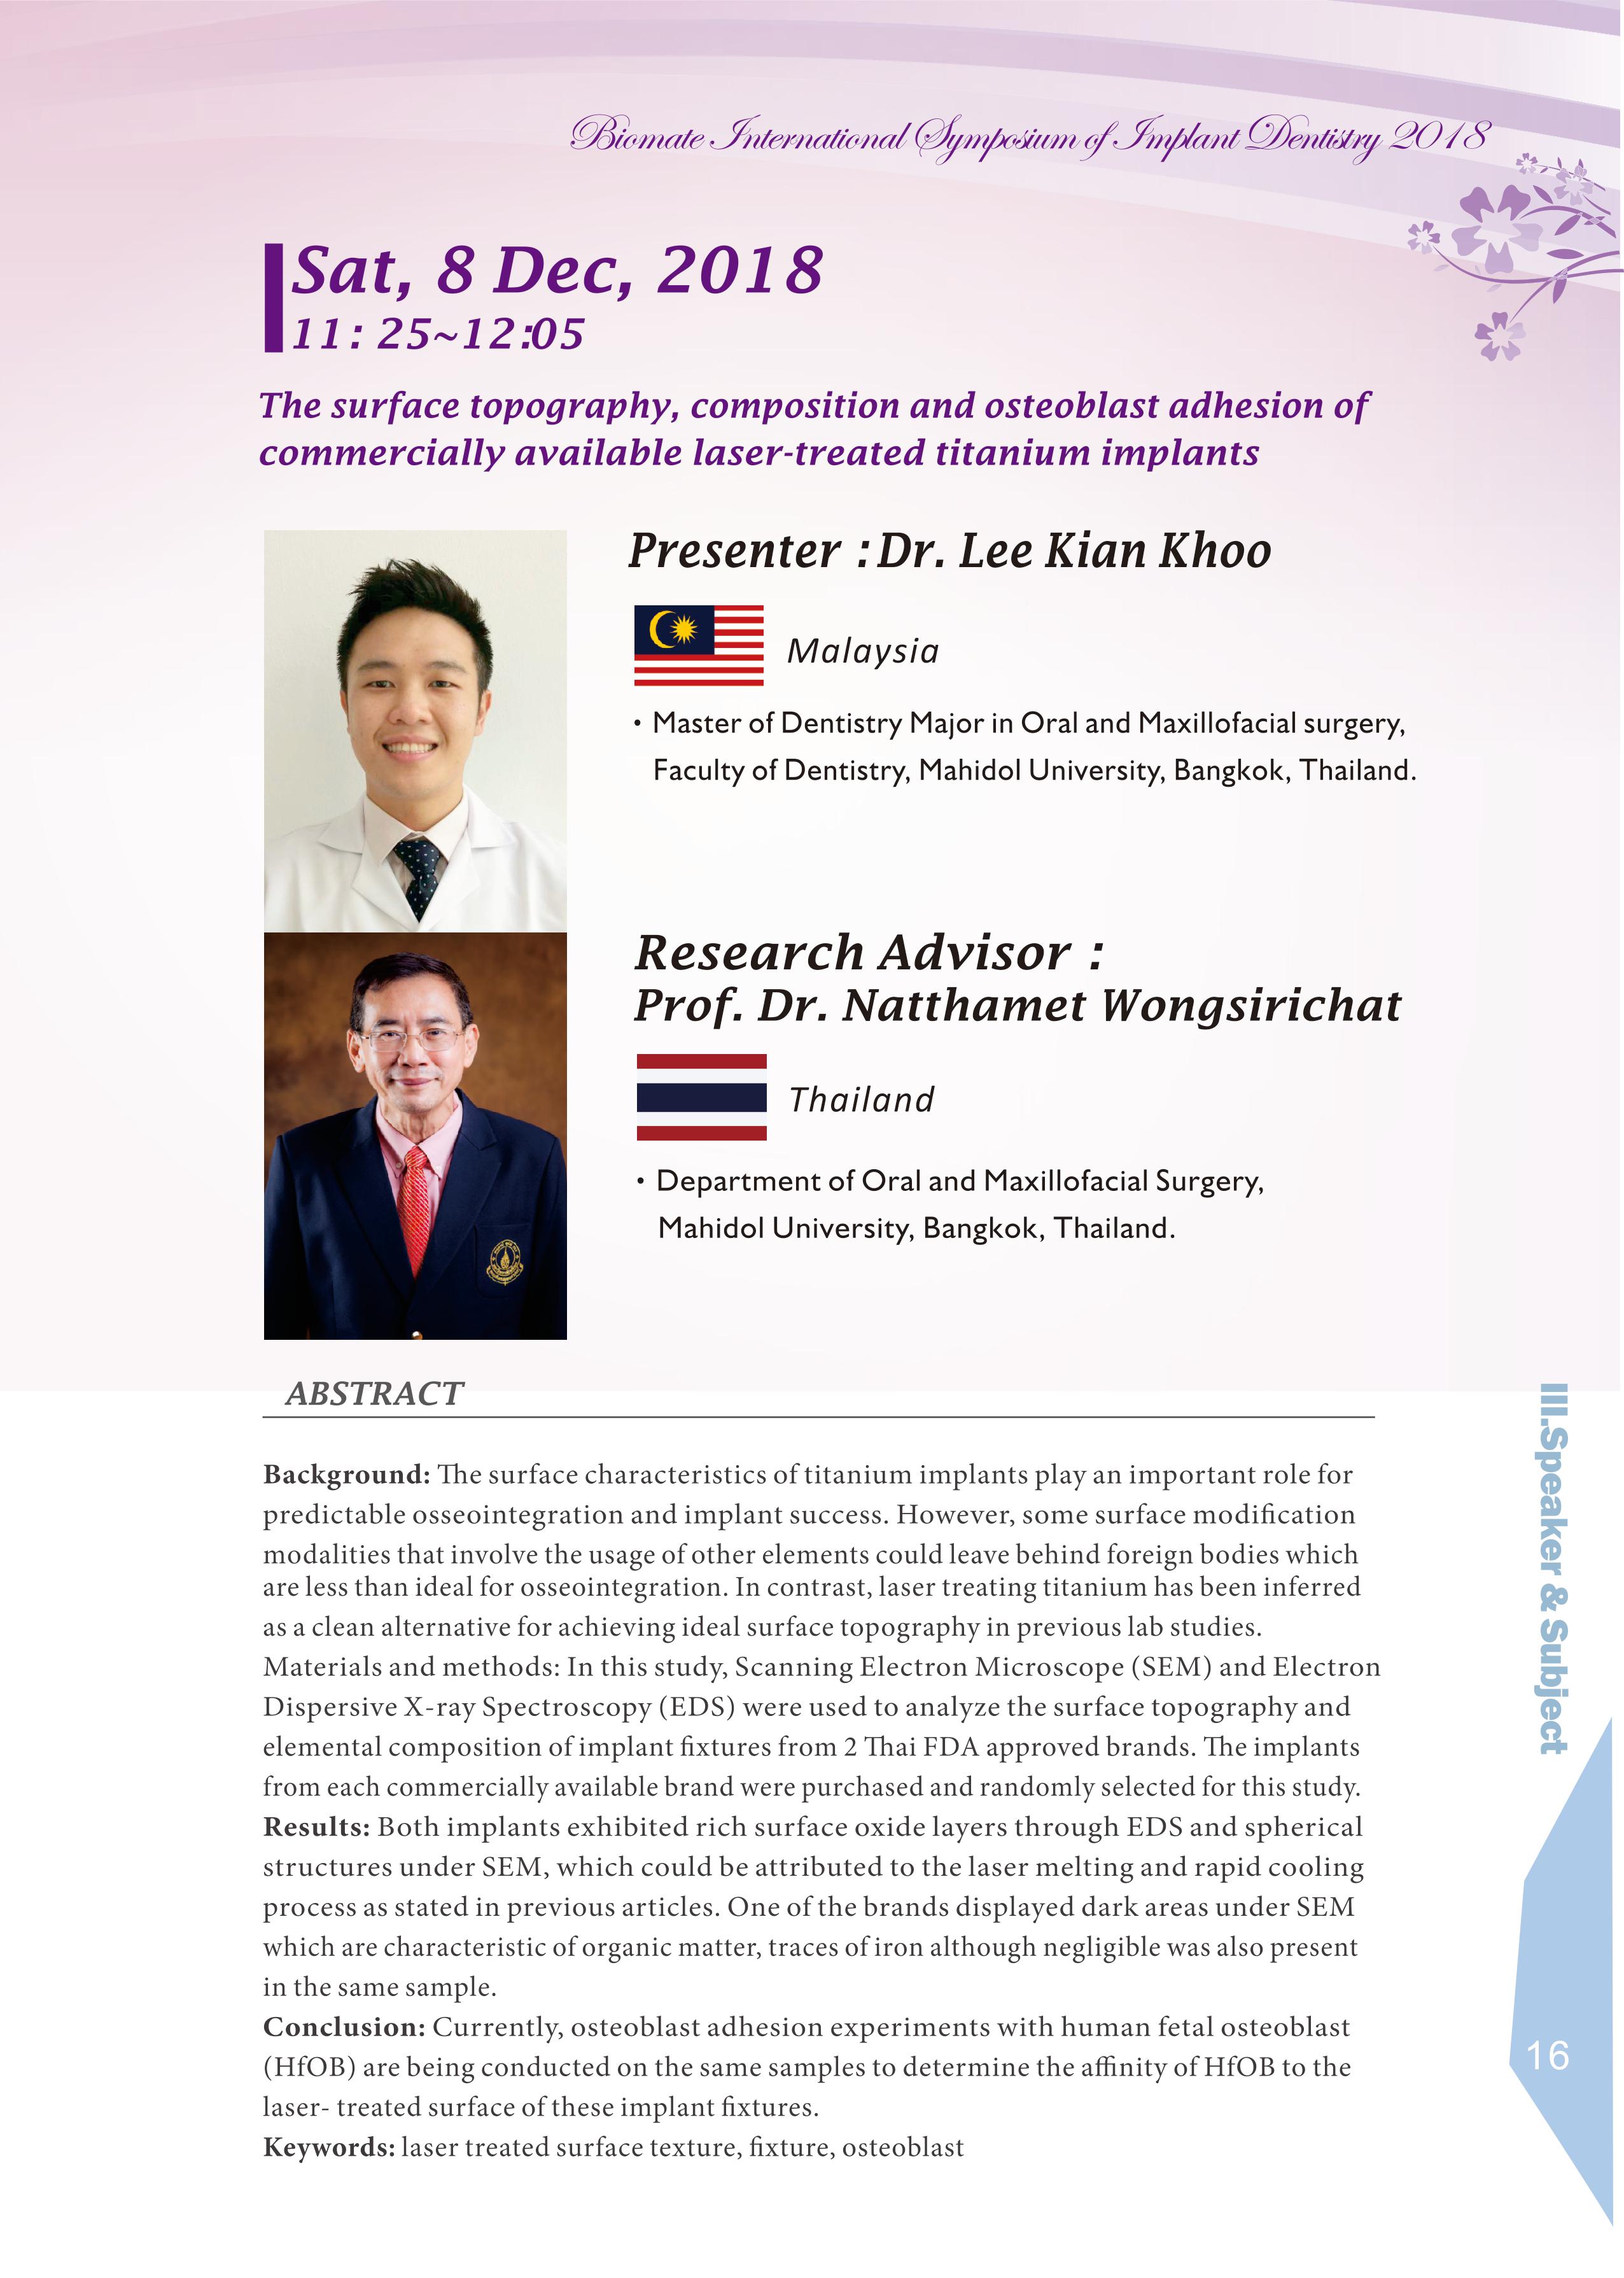 Biomate Internation Symposium of Implant Dentistry-Dr.Lee Kian Khoo